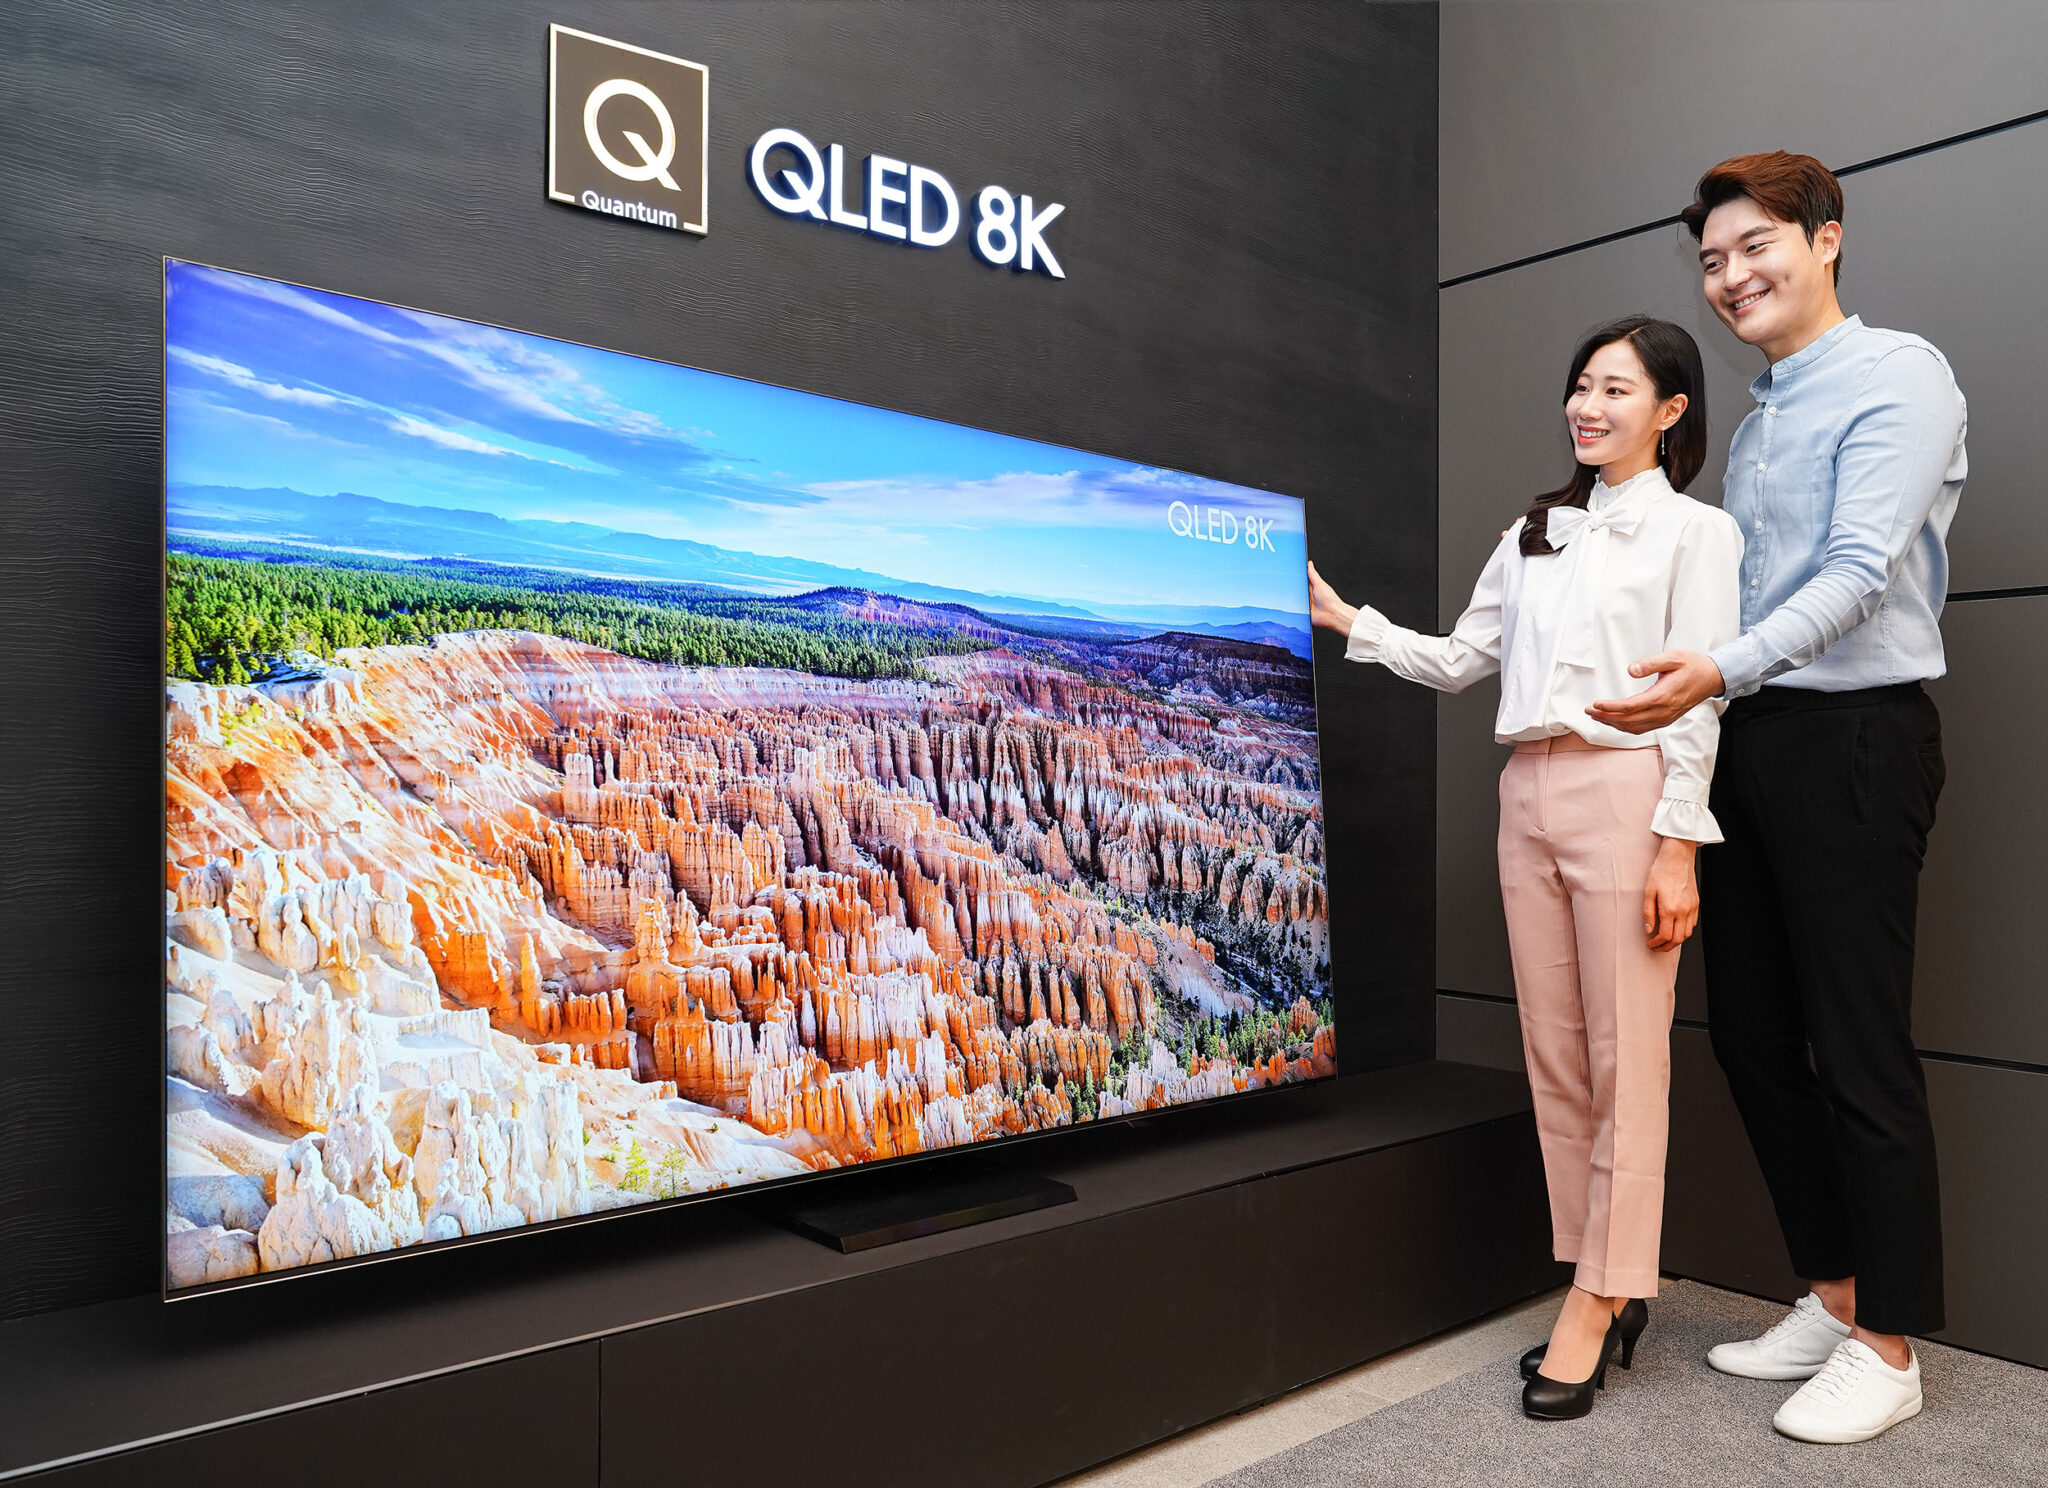 Samsung 2020 купить. Телевизор Samsung QLED 8k. Телевизор самсунг QLED 8к. Телевизор Samsung QLED 8k 2020. Samsung QLED 8k 85 дюймов.